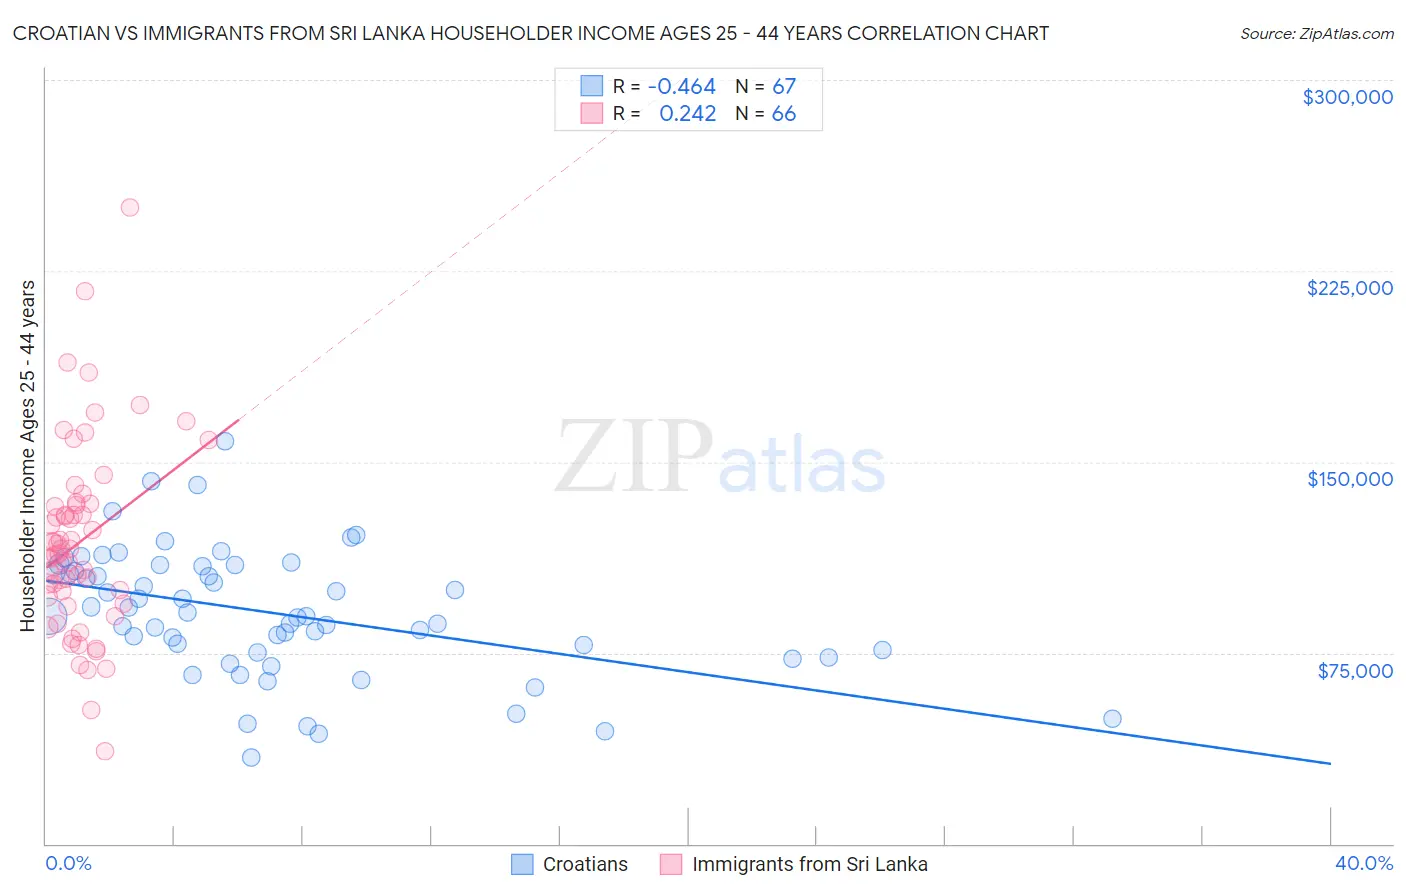 Croatian vs Immigrants from Sri Lanka Householder Income Ages 25 - 44 years